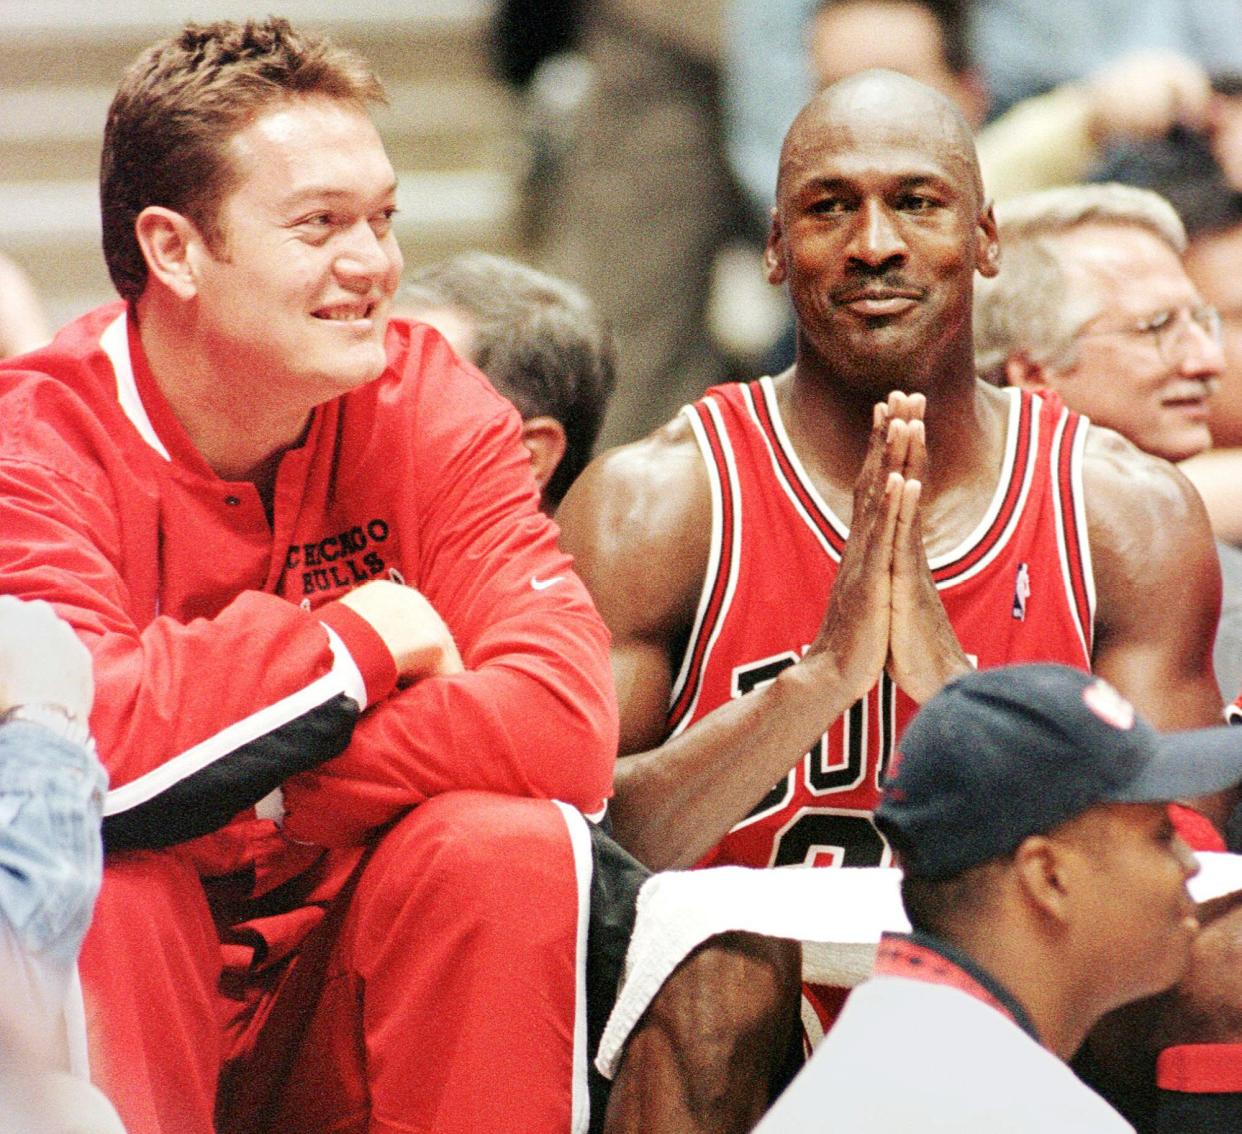 Luc Longley (L) and Michael Jordan (R) of the Chicago Bulls